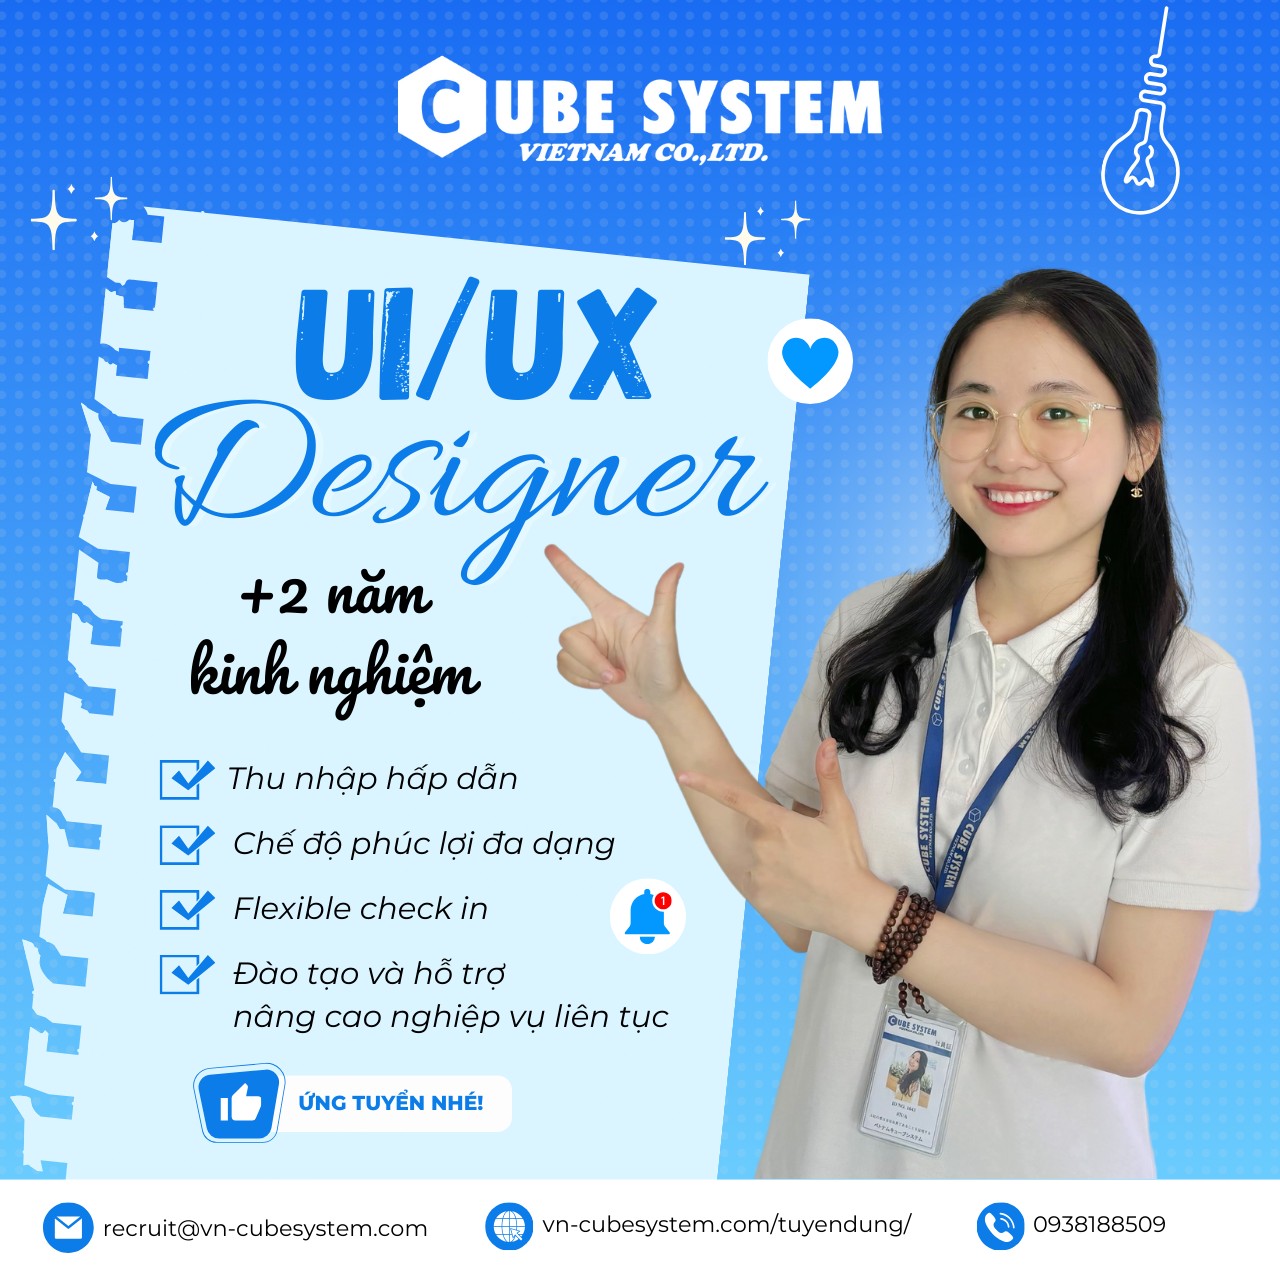 Cube System Vietnam tuyển dụng UI/UX Designer